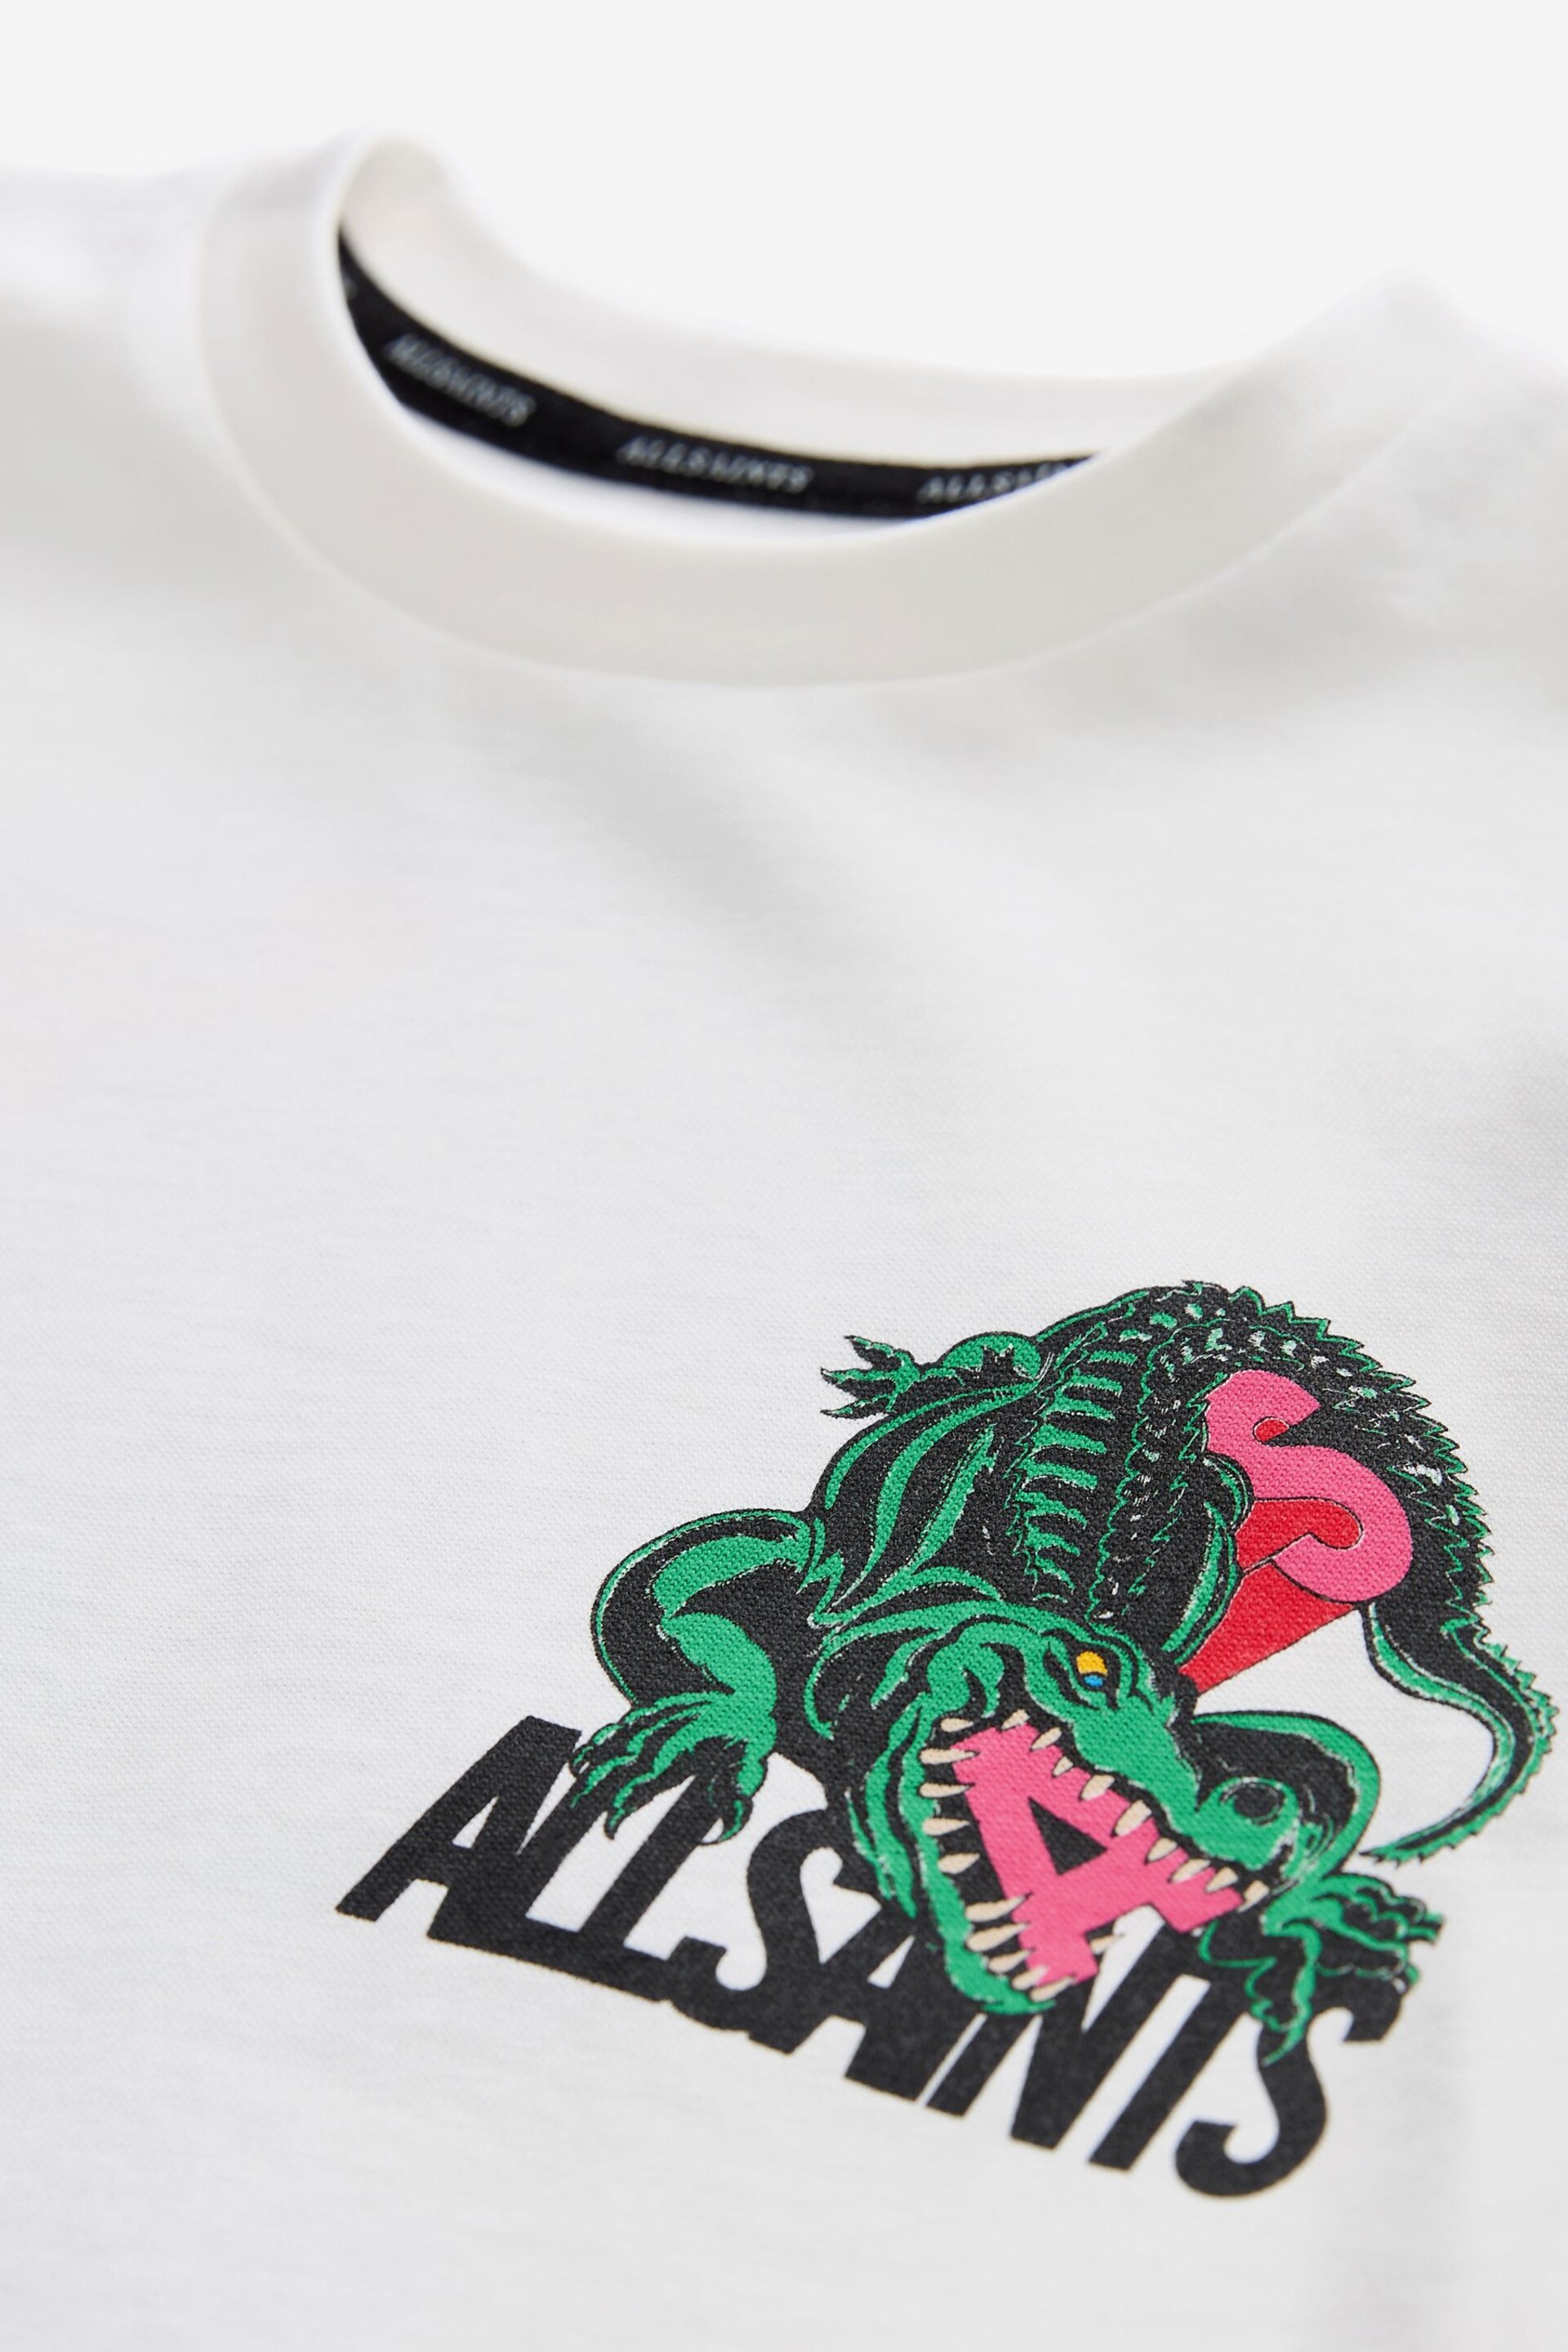 smALLSAINTS White/Gator Boys Graphic Oversized Crew T-Shirt - Image 7 of 8